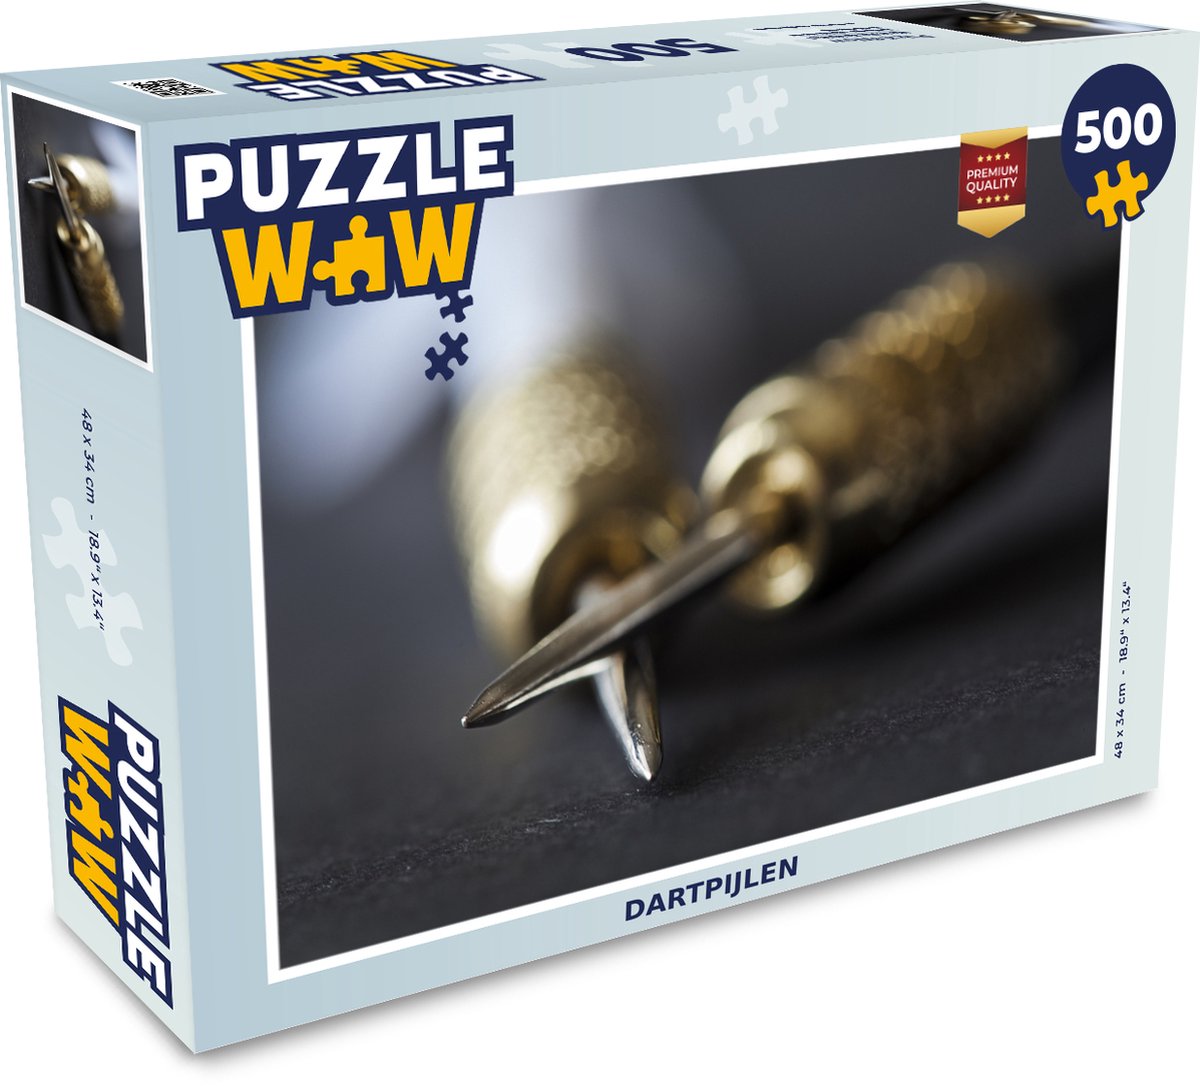 Puzzel 500 stukjes Darten - Dartpijlen - PuzzleWow heeft +100000 puzzels